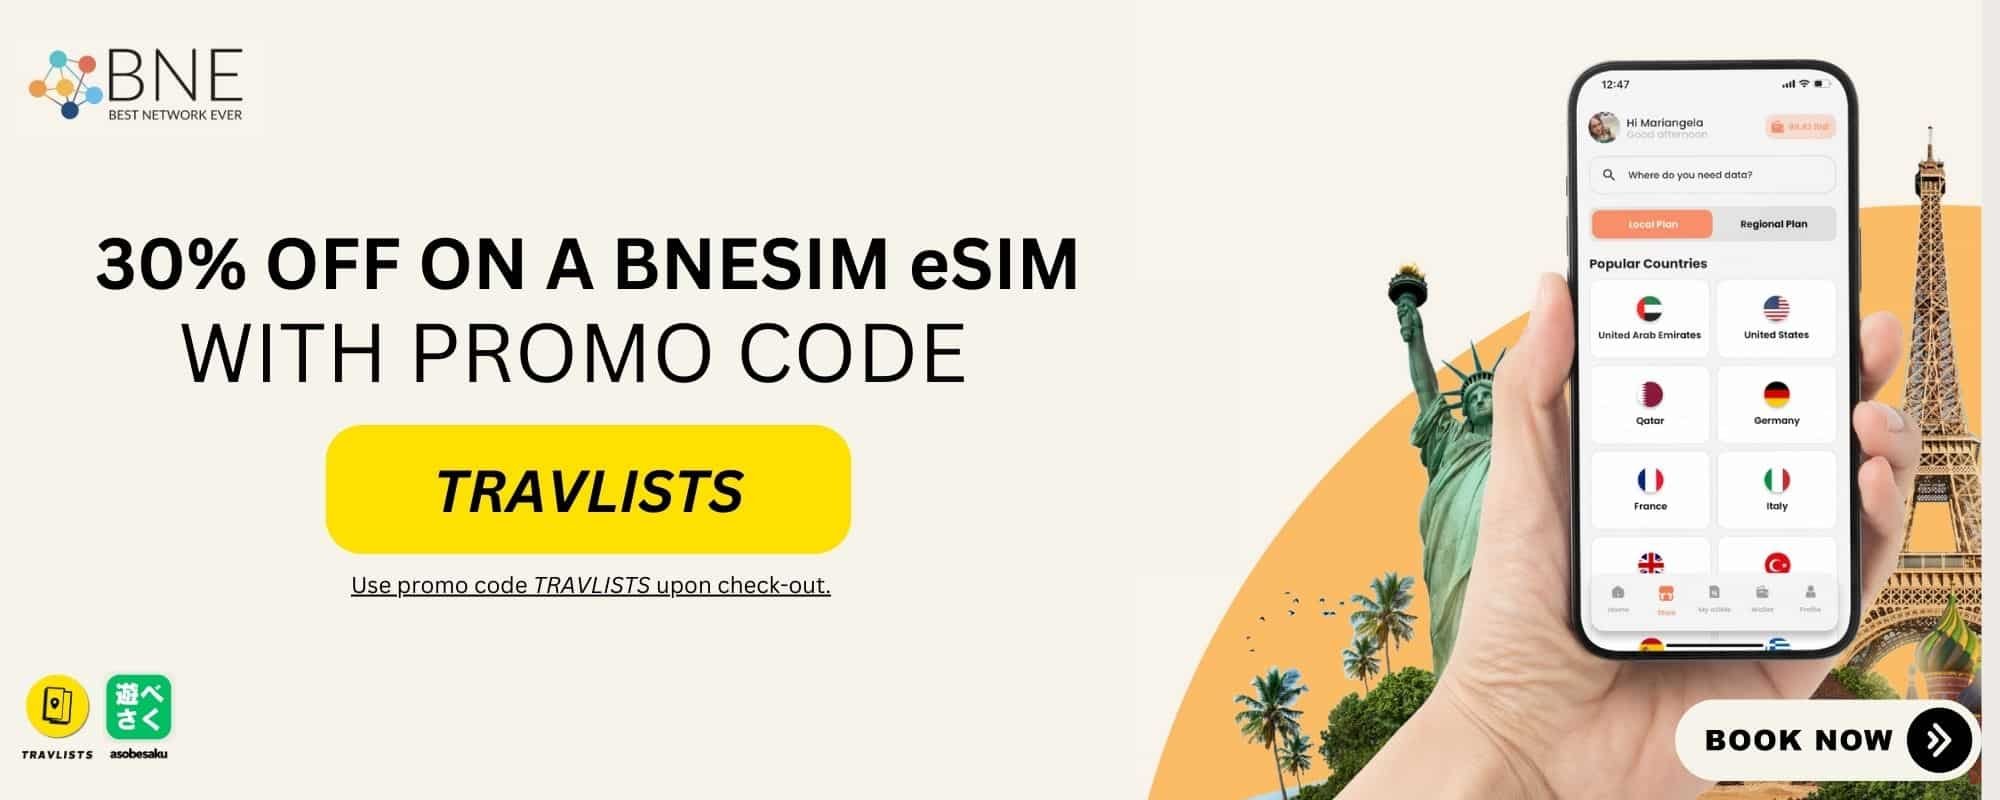 bnesim-promo-code-esim-spain